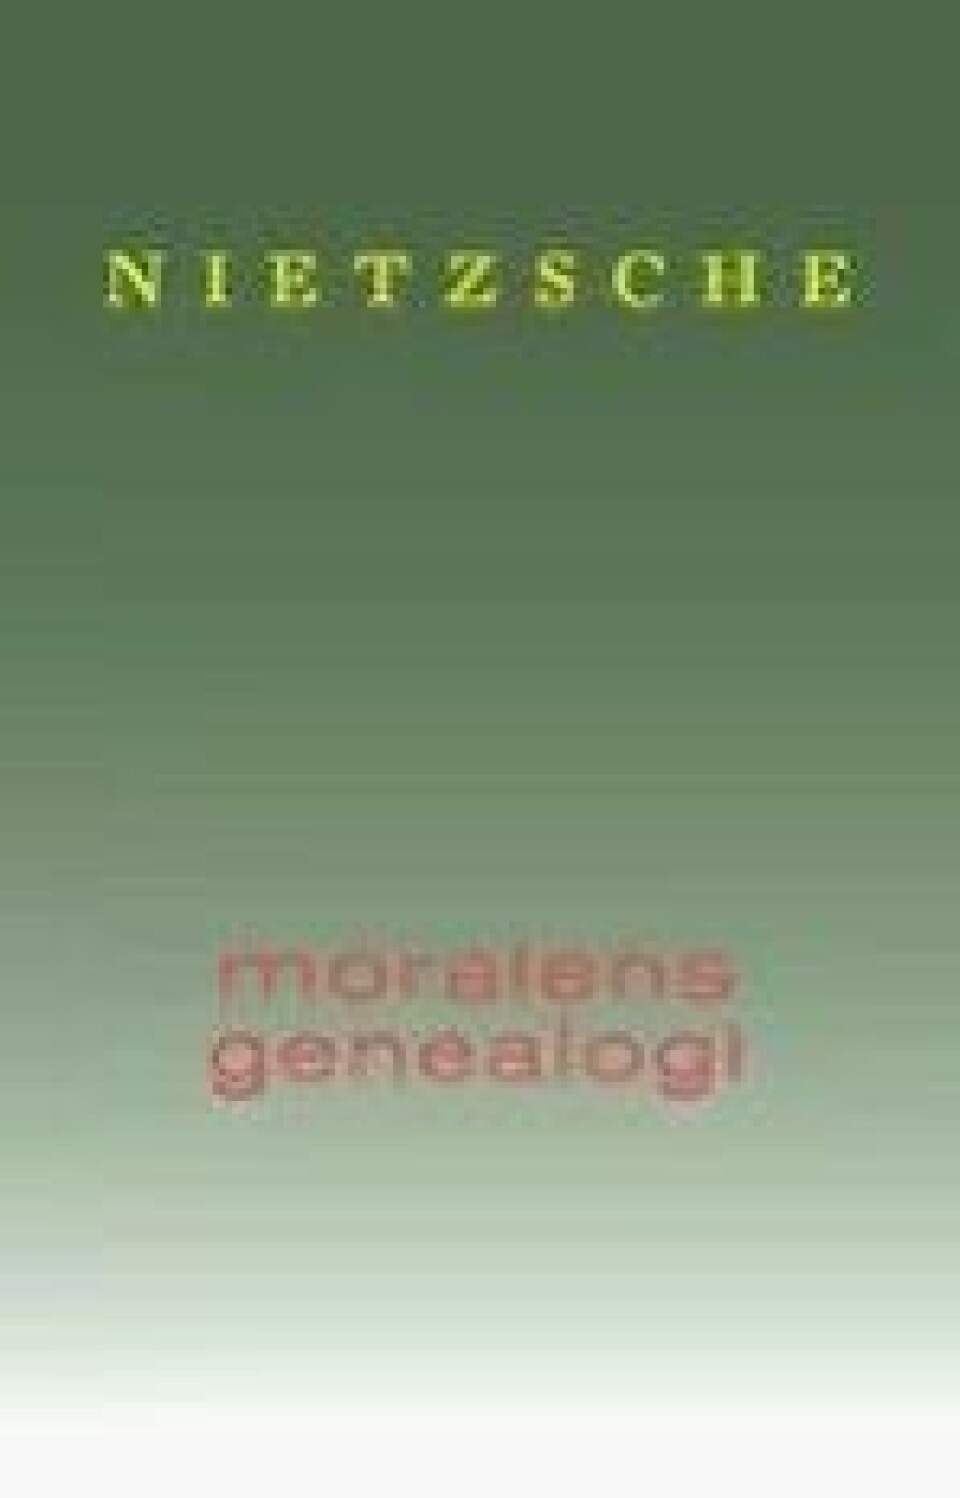 Bok: Moralens genealogi – Friedrich Nietzsche. Oversatt av Øystein Skar. Etterord av Ingeborg Owesen. Spartacus: Oslo 2010